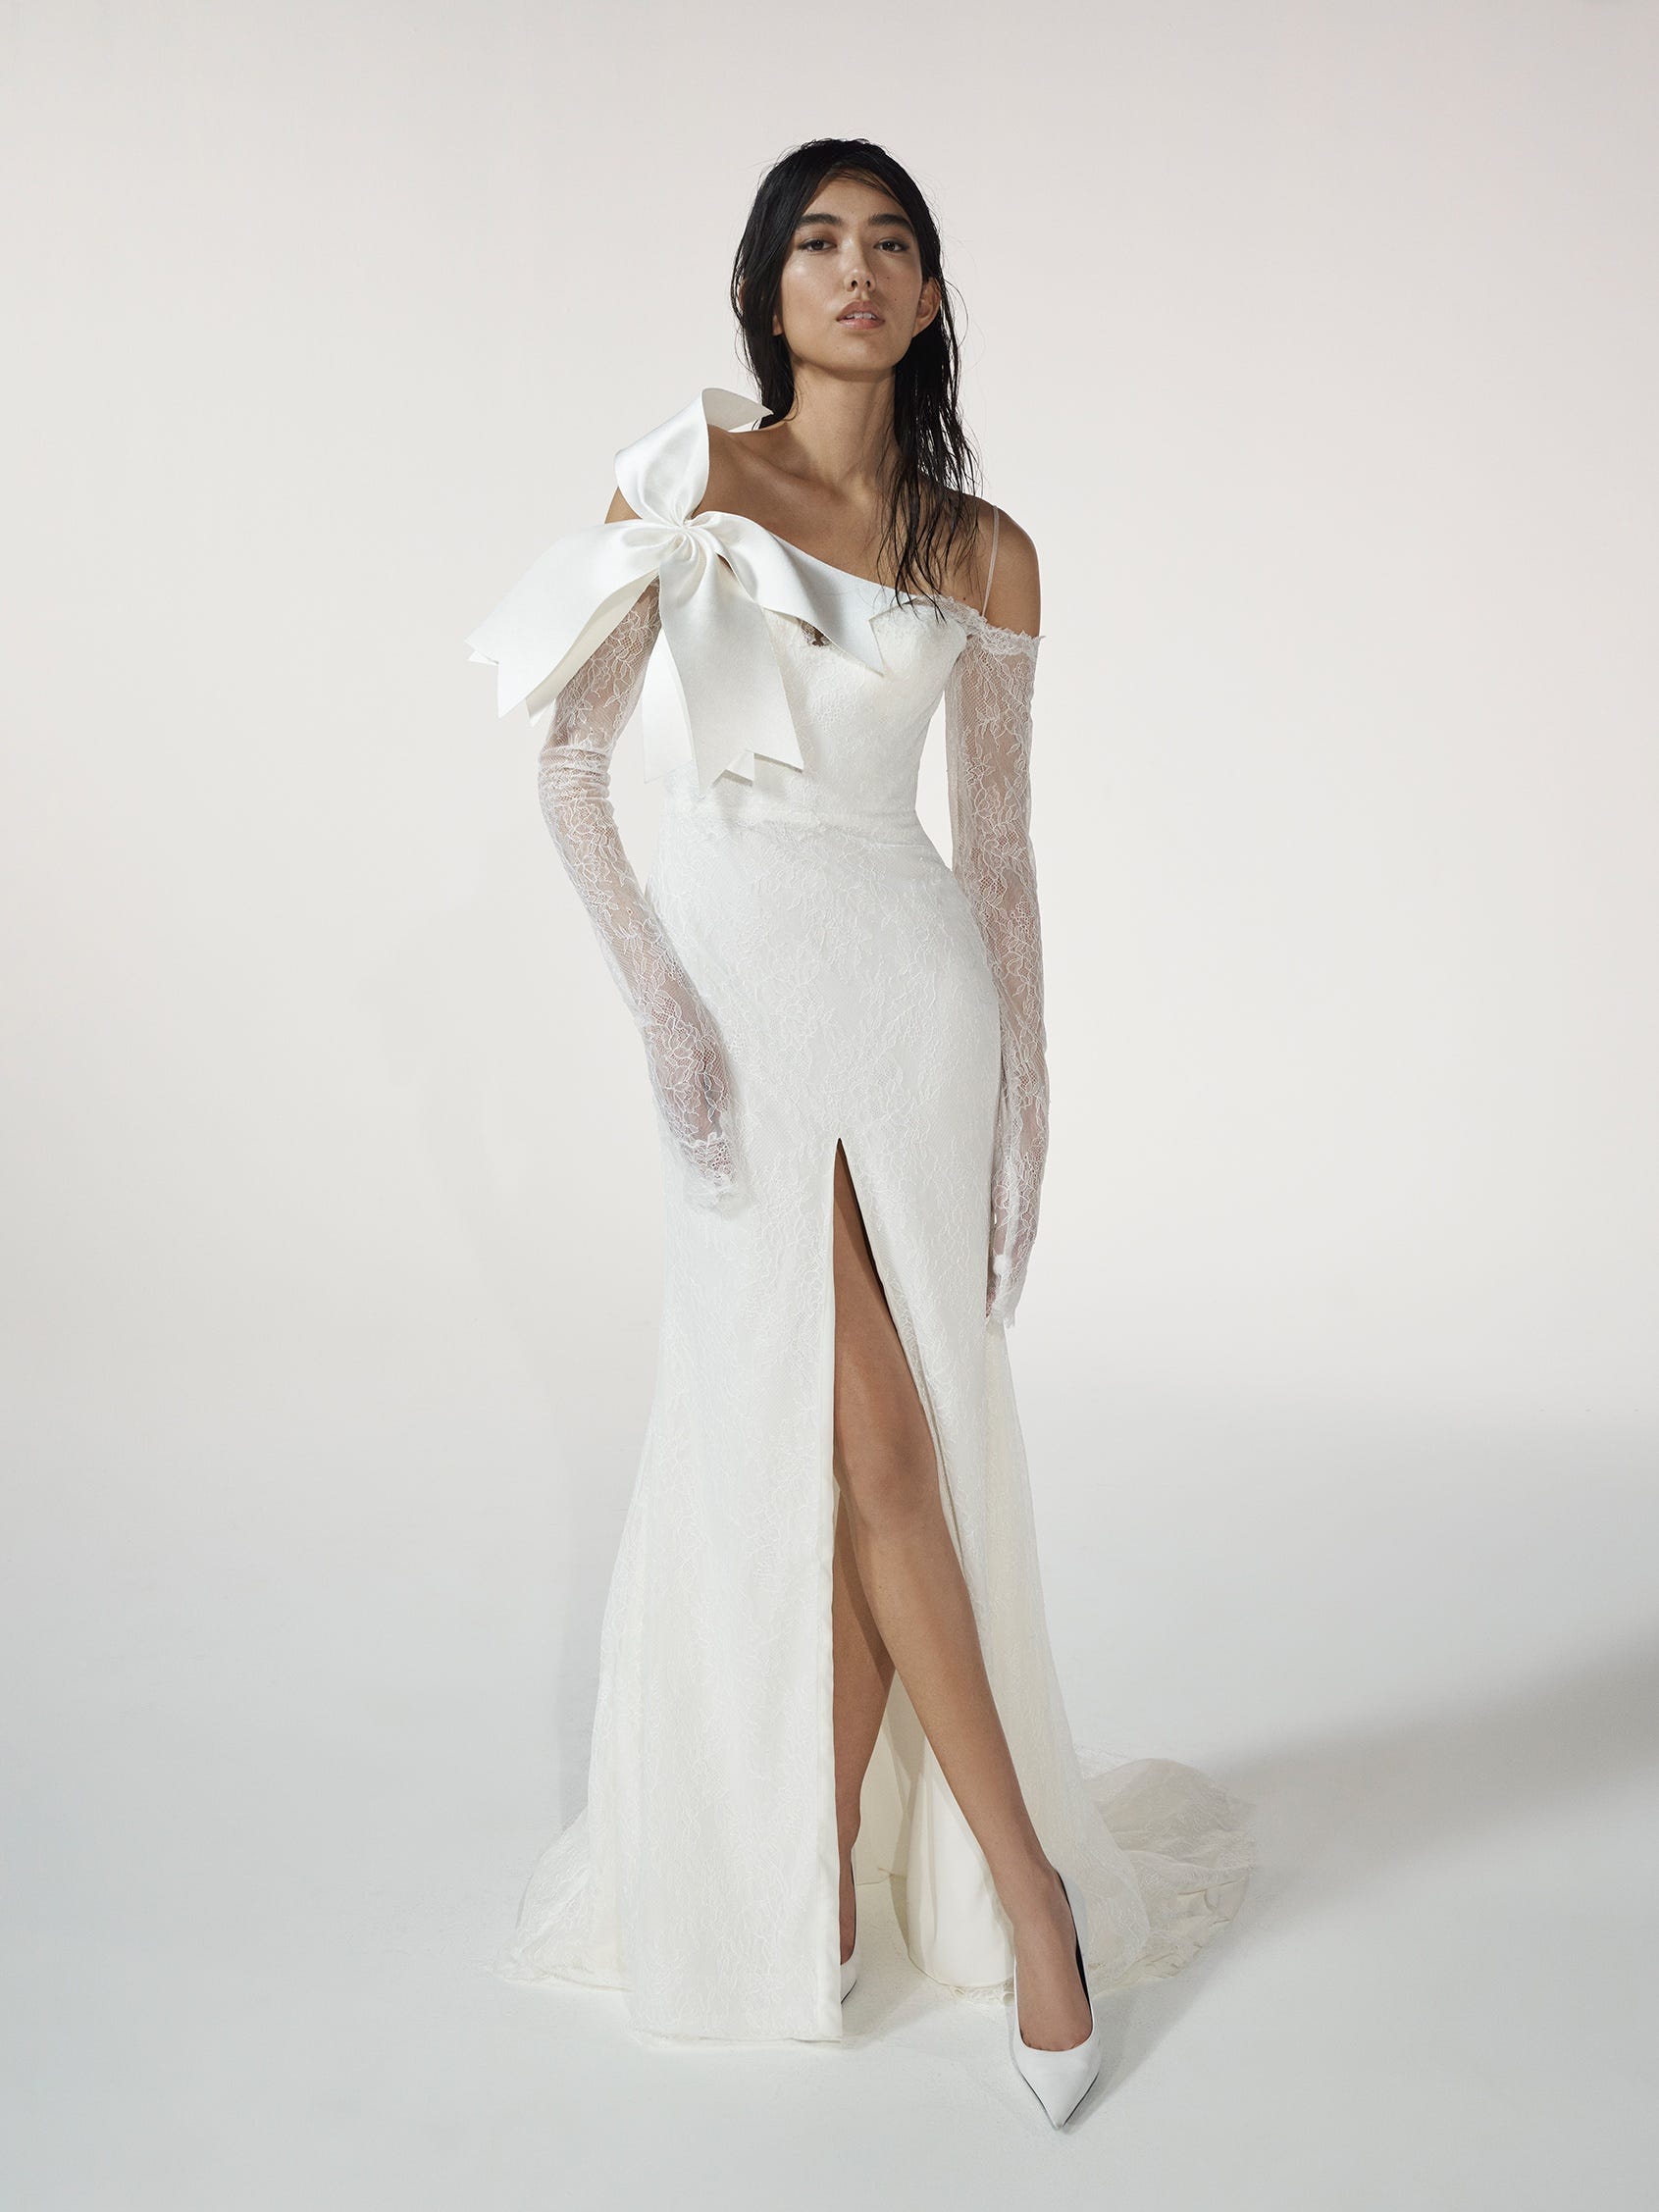 Vera Wang Designed Athleisure Wedding Dresses for Vera Wang Bride 2023